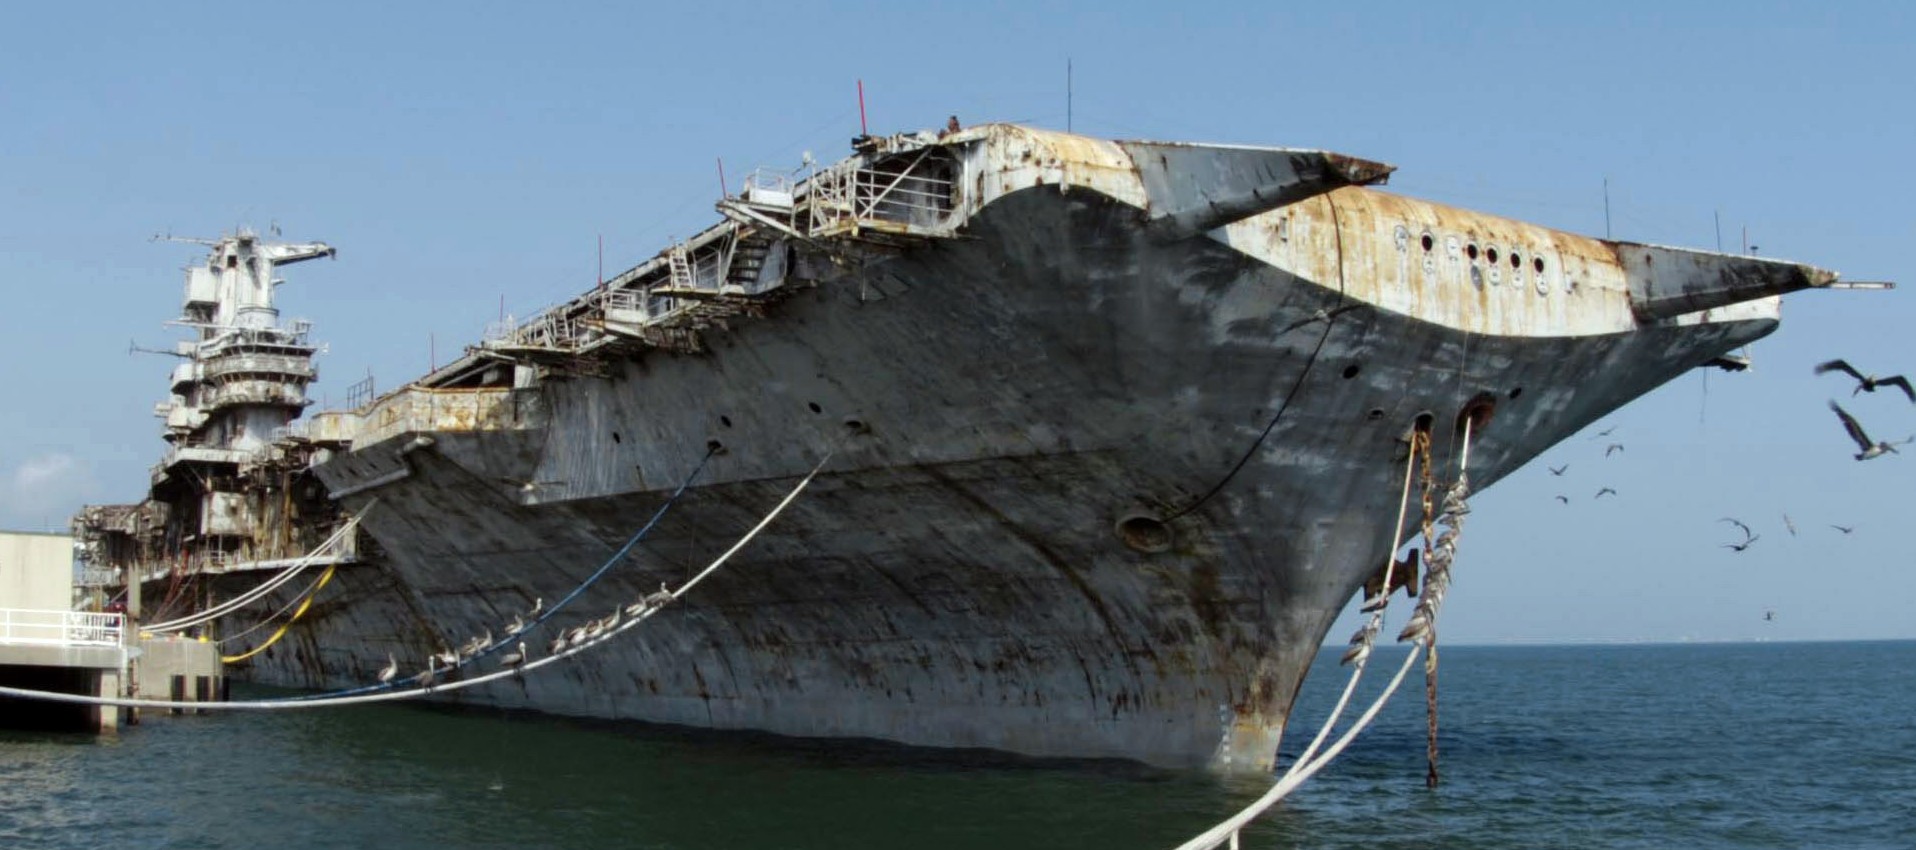 cv-34 uss oriskany essex class aircraft carrier us navy sinking nas pensacola florida 105